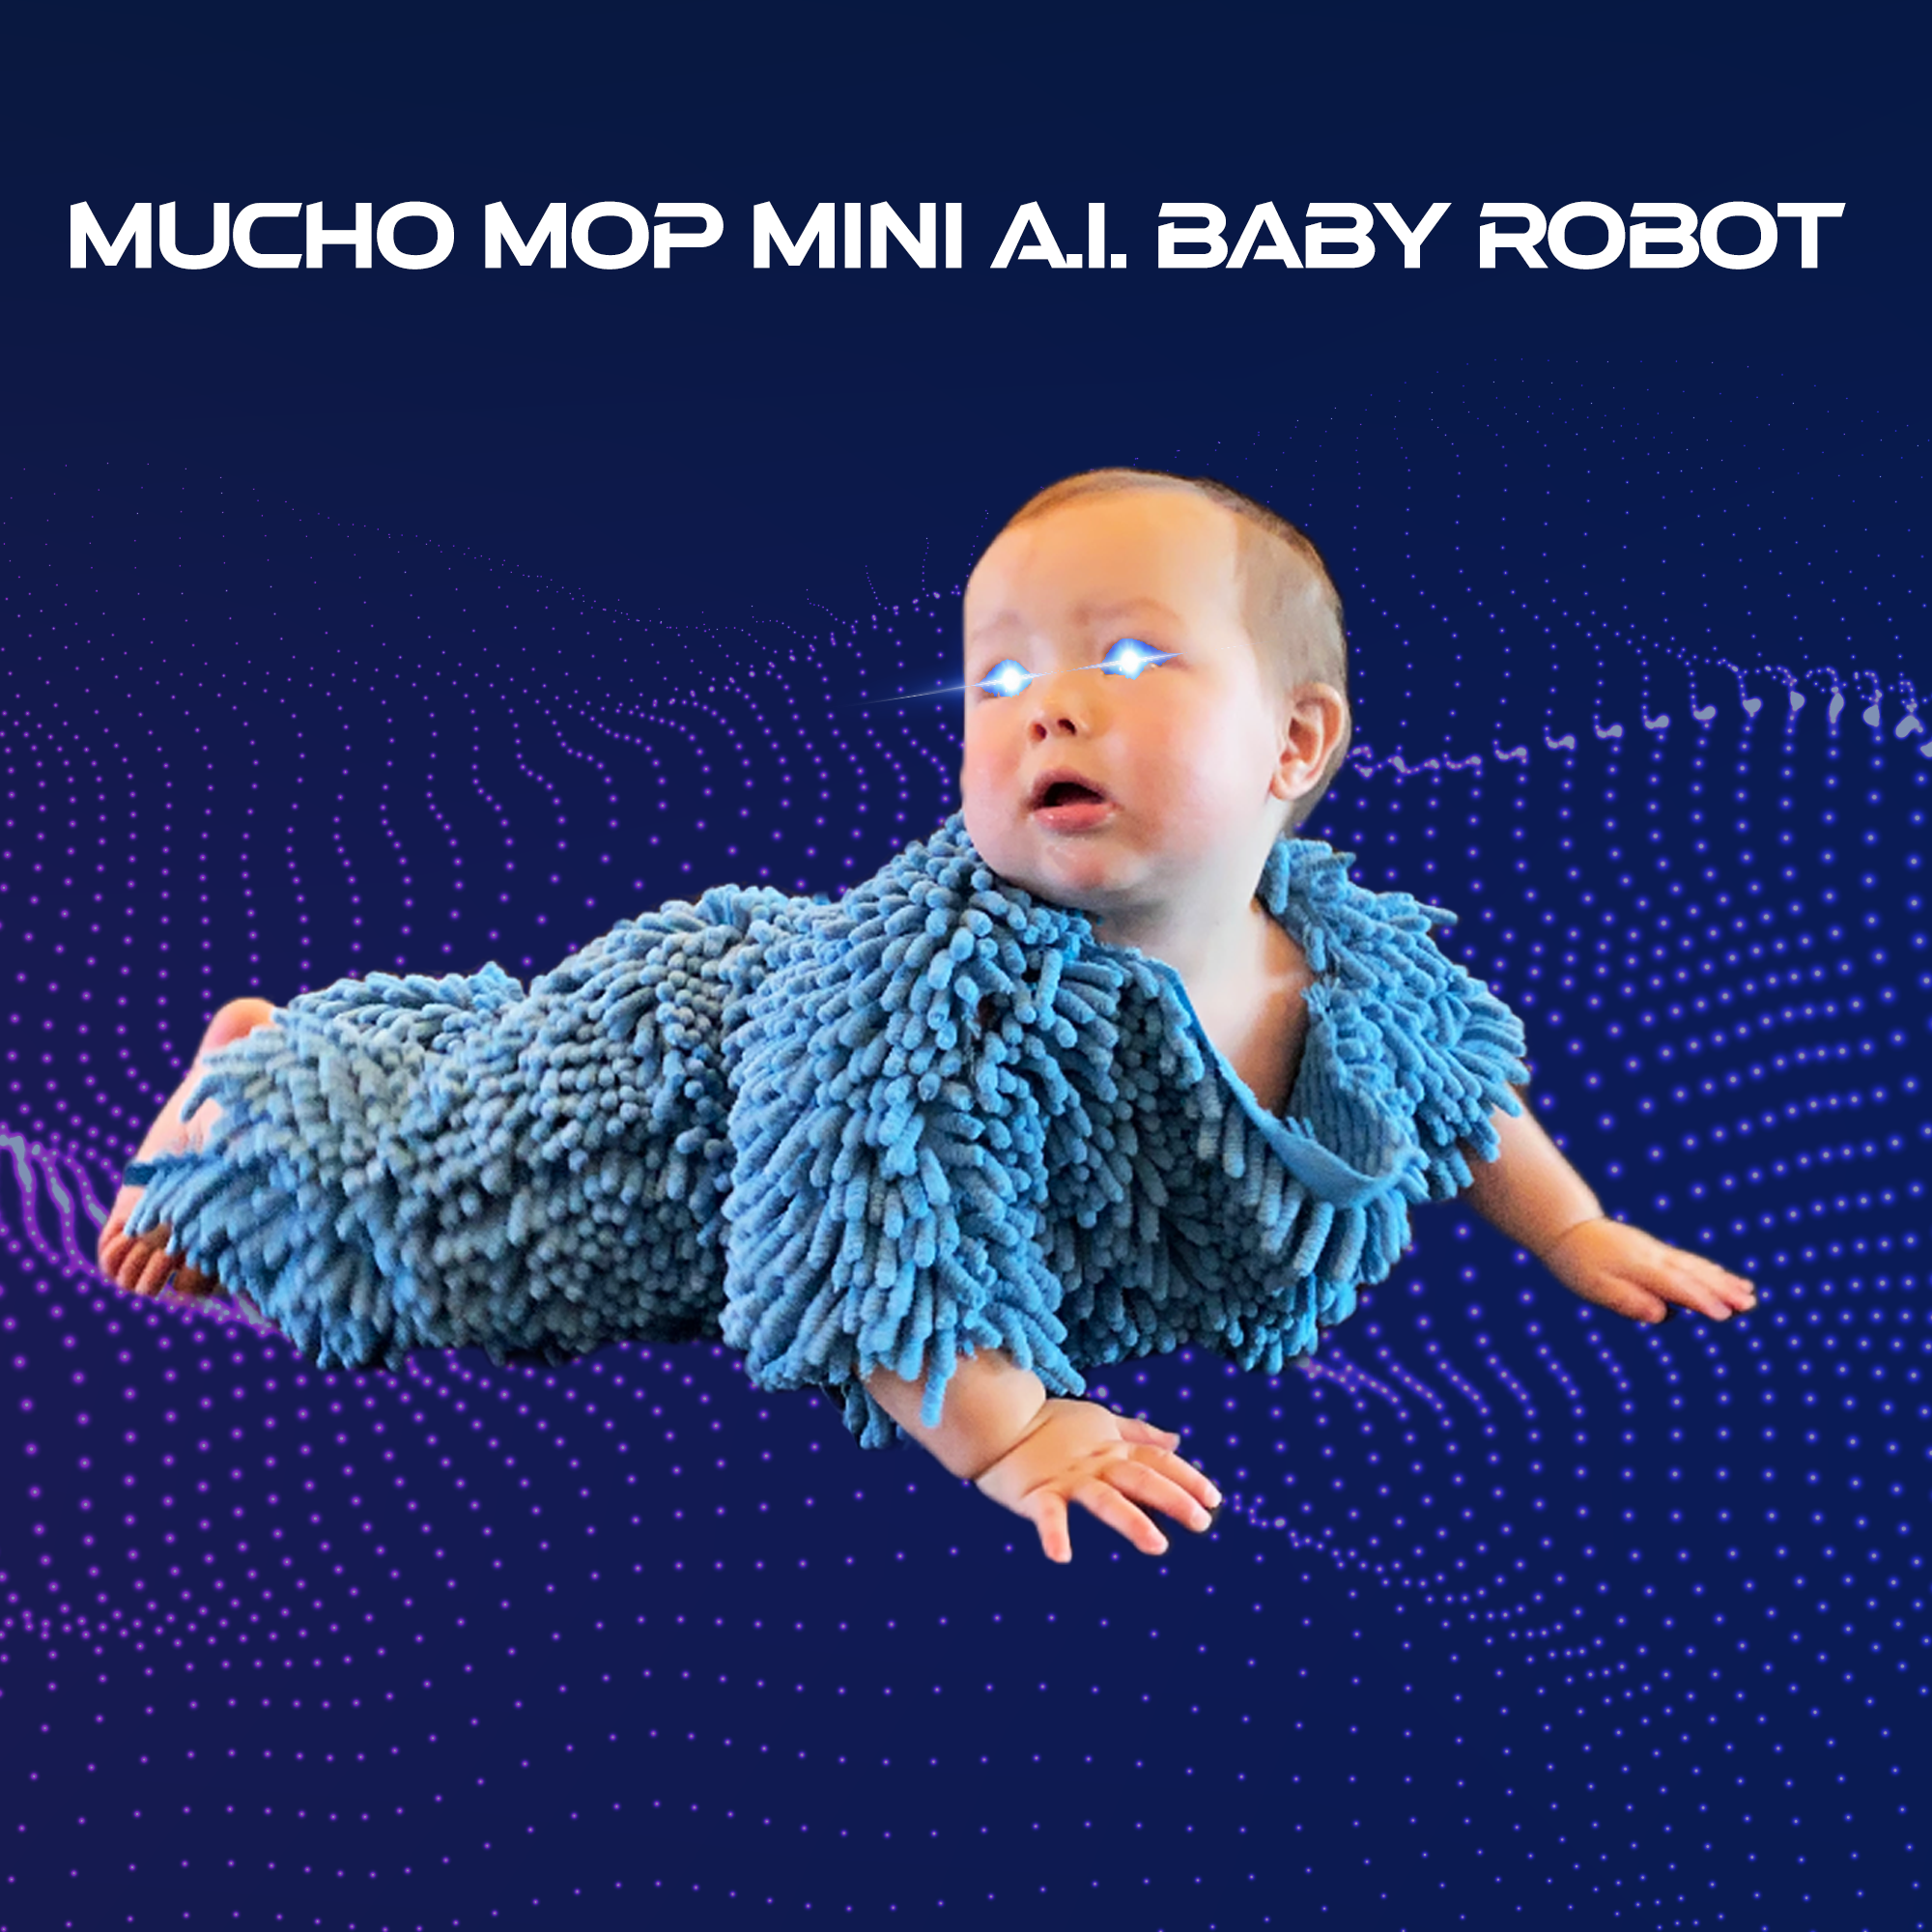 Mucho Mop Mini A.I. Baby Robot